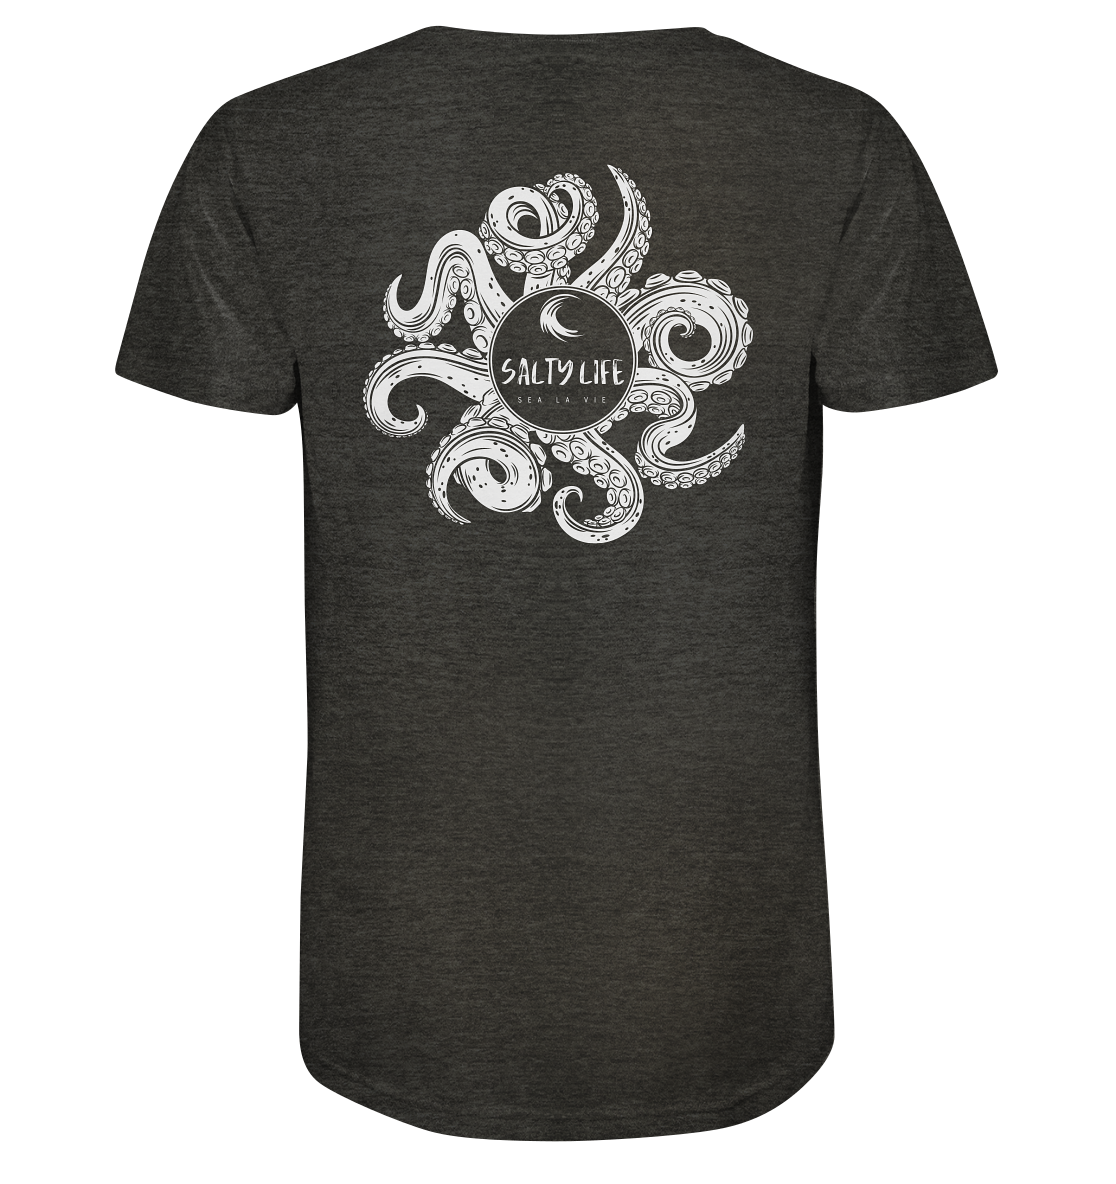 Salty Life "Under the Curse of the Octopus" - Organic Shirt (meliert)